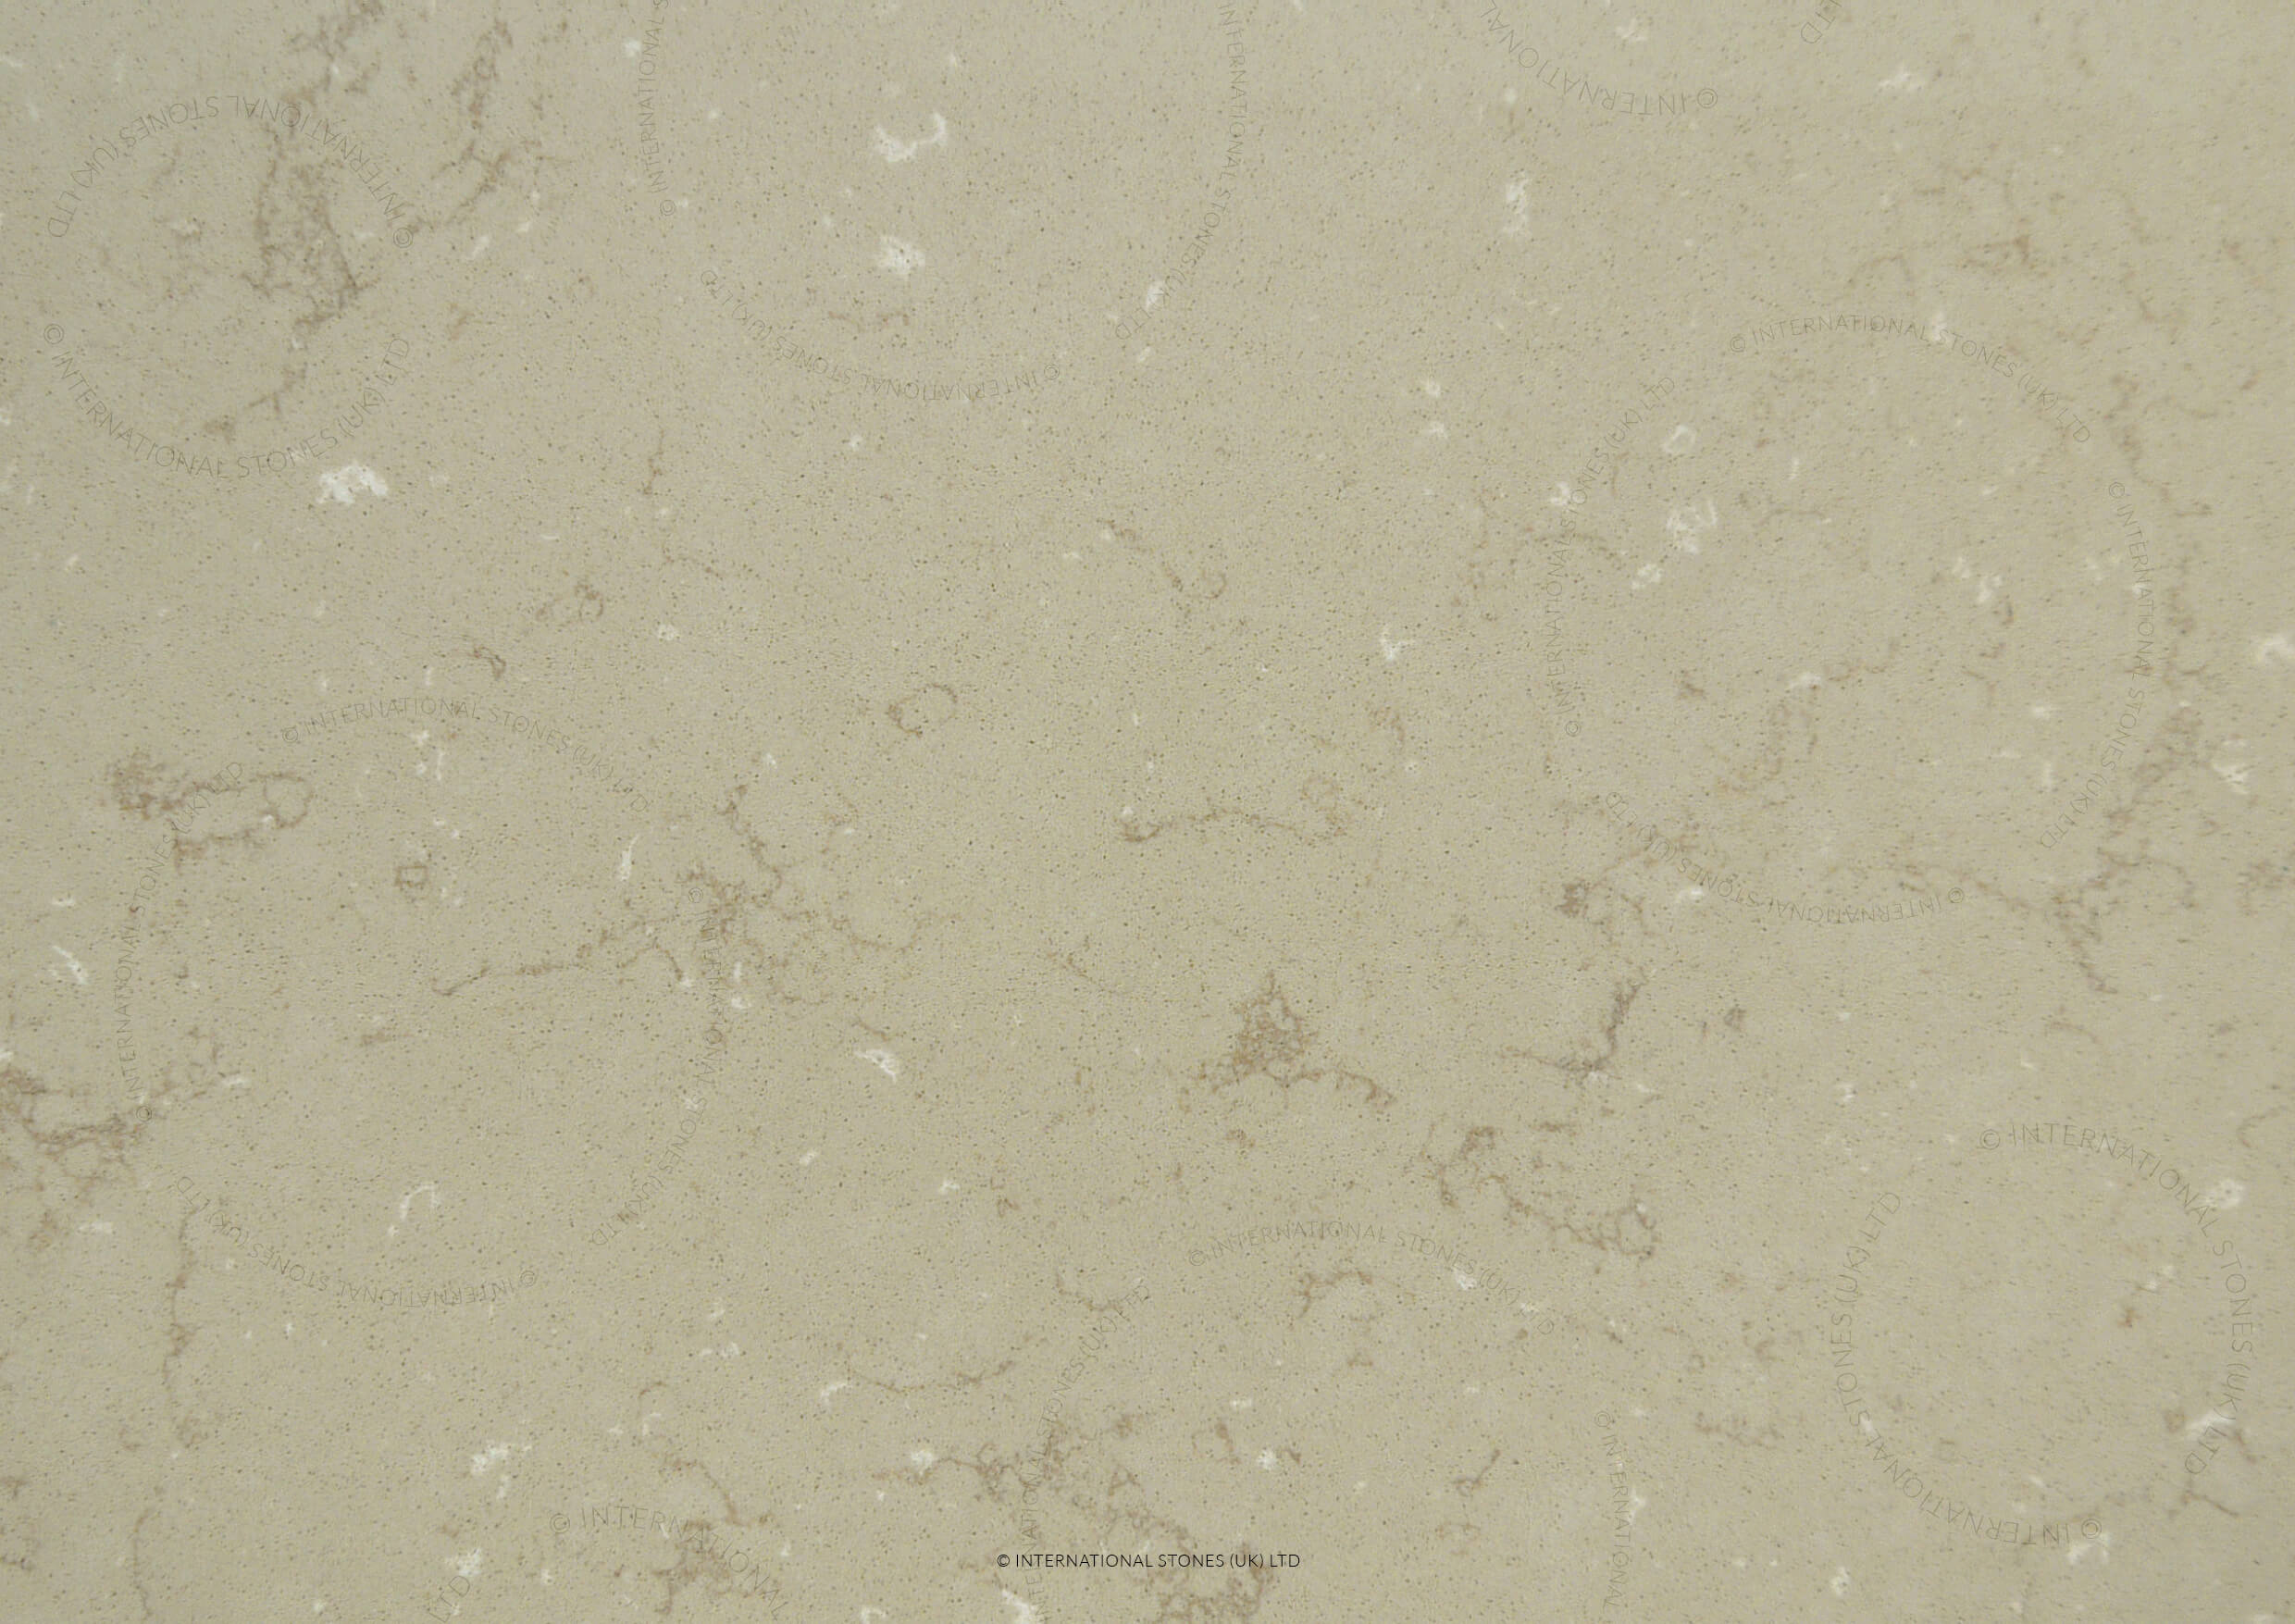 International Stone IQ Limestone - scunthorpe - Crowle